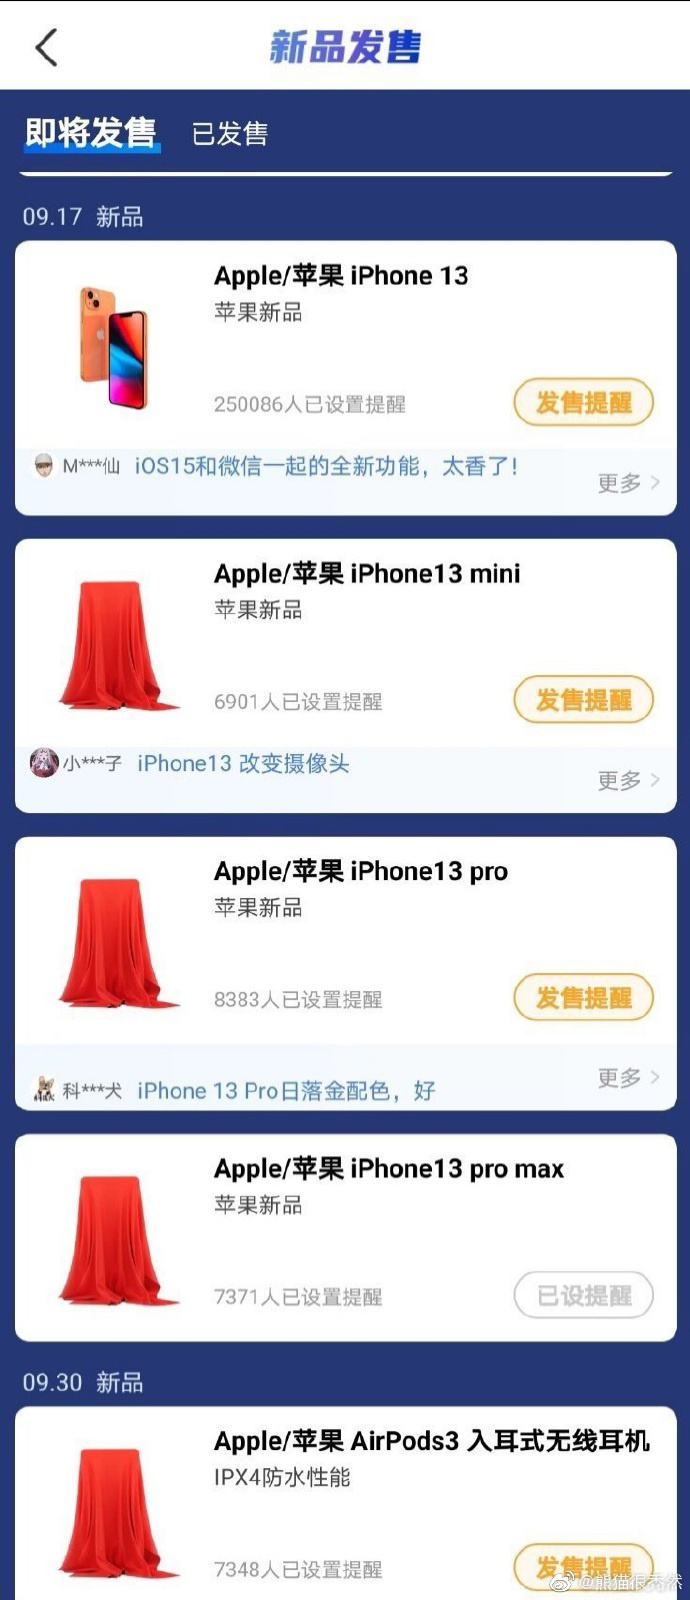 iPhone 13将于9月17日发售 AirPods 3则需要等到9月30日